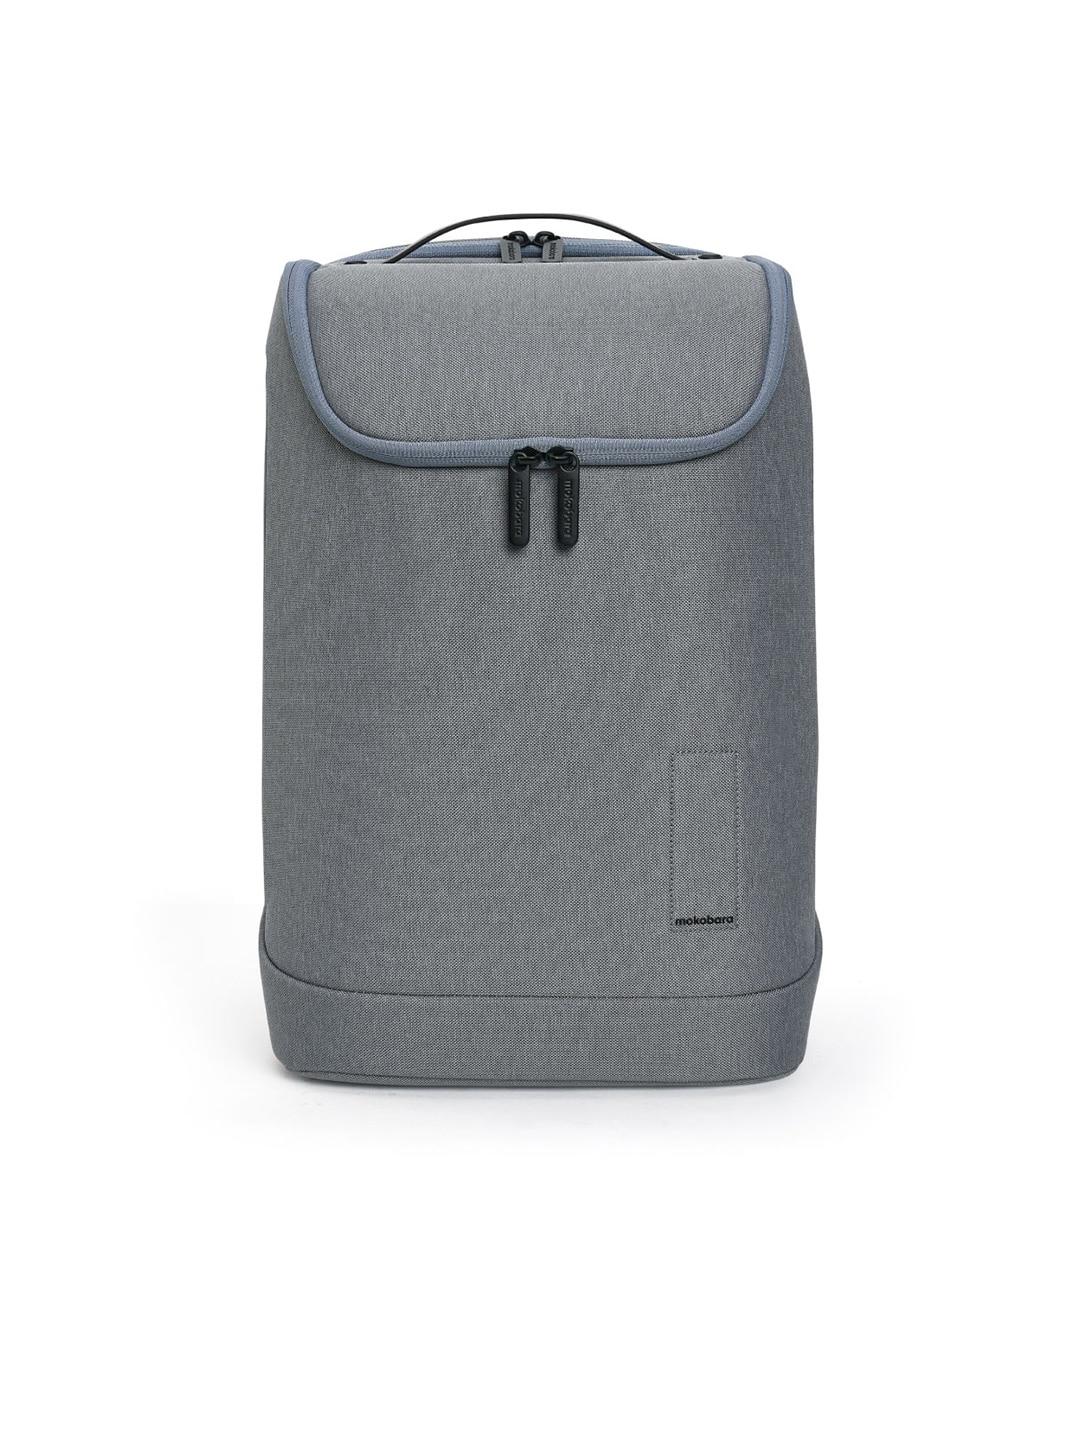 mokobara-unisex-water-resistant-transit-backpack